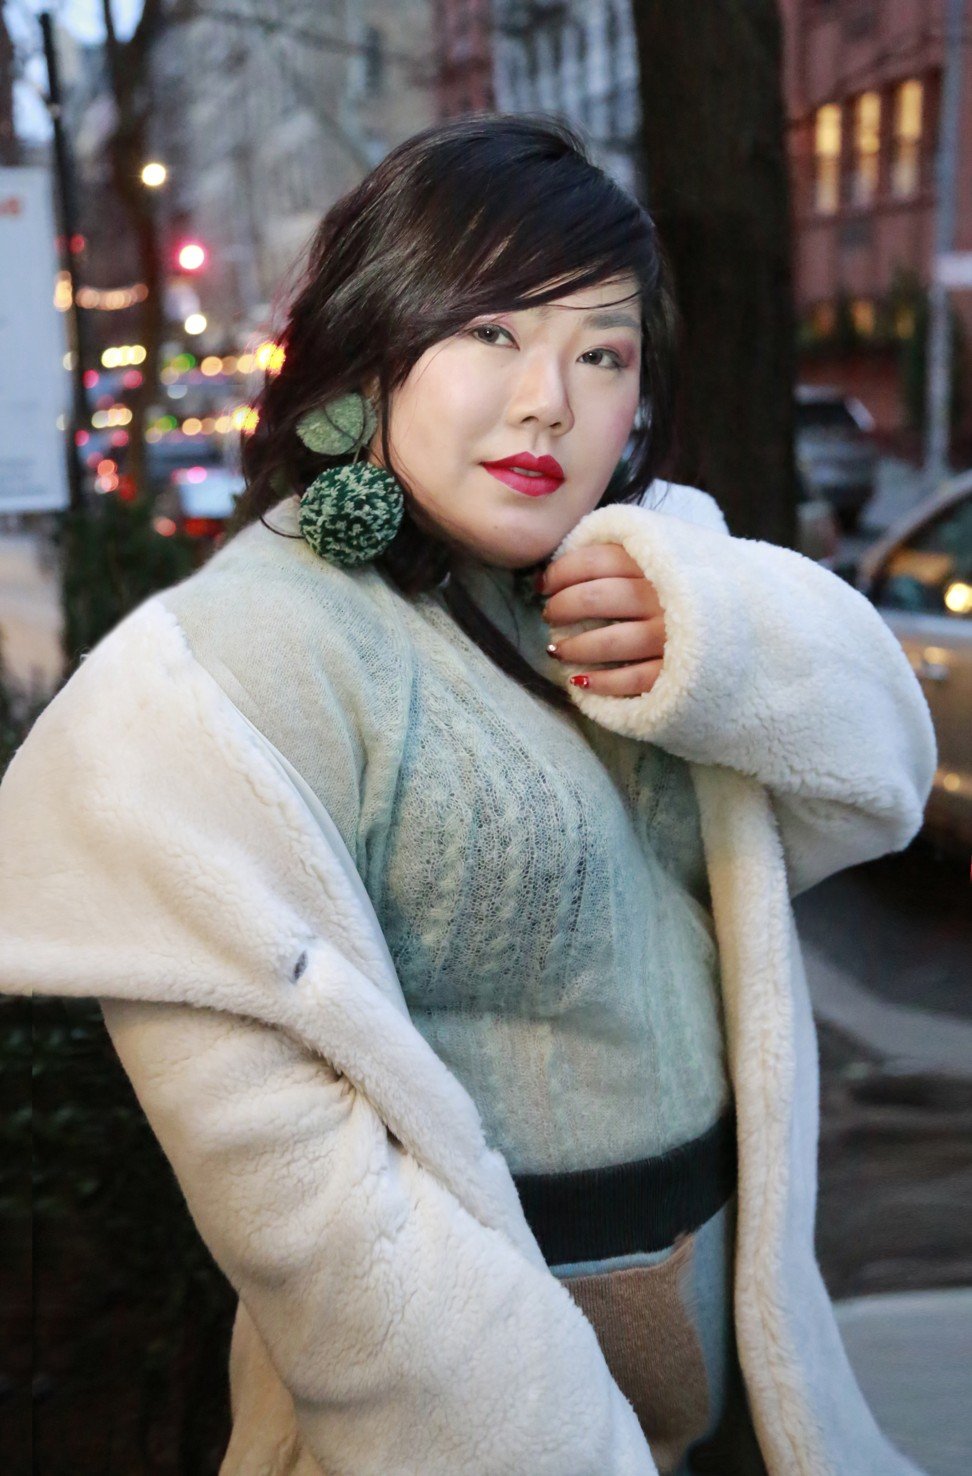 Plus-size New York Chinese fashion influencer Scarlett Hao: 'I